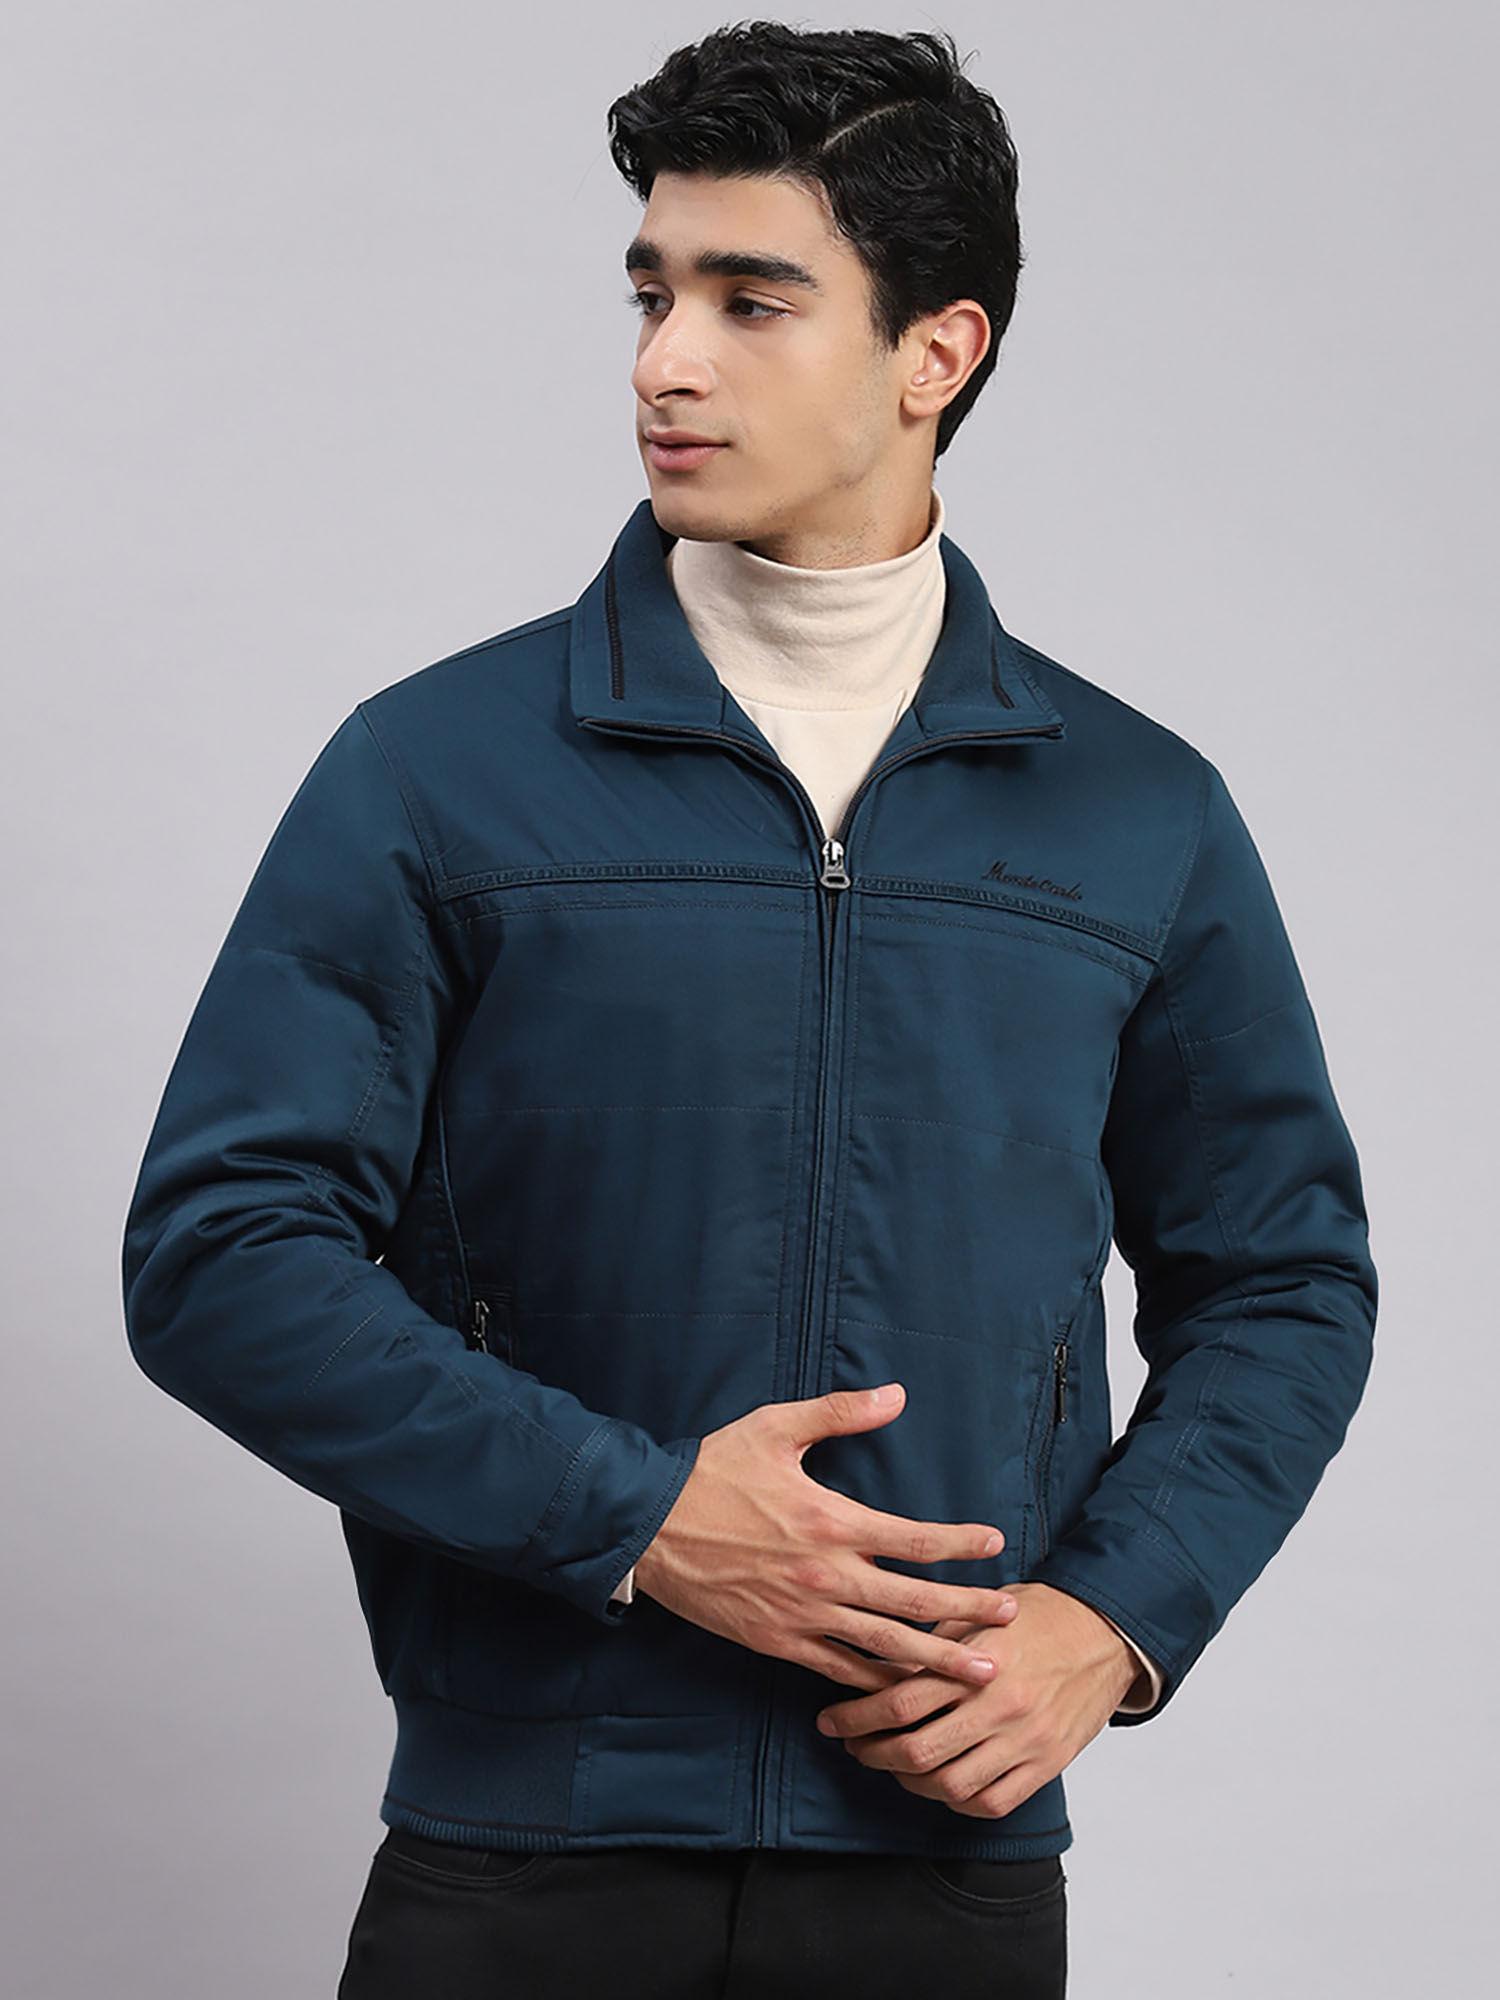 teal-solid-spread-collar-jacket